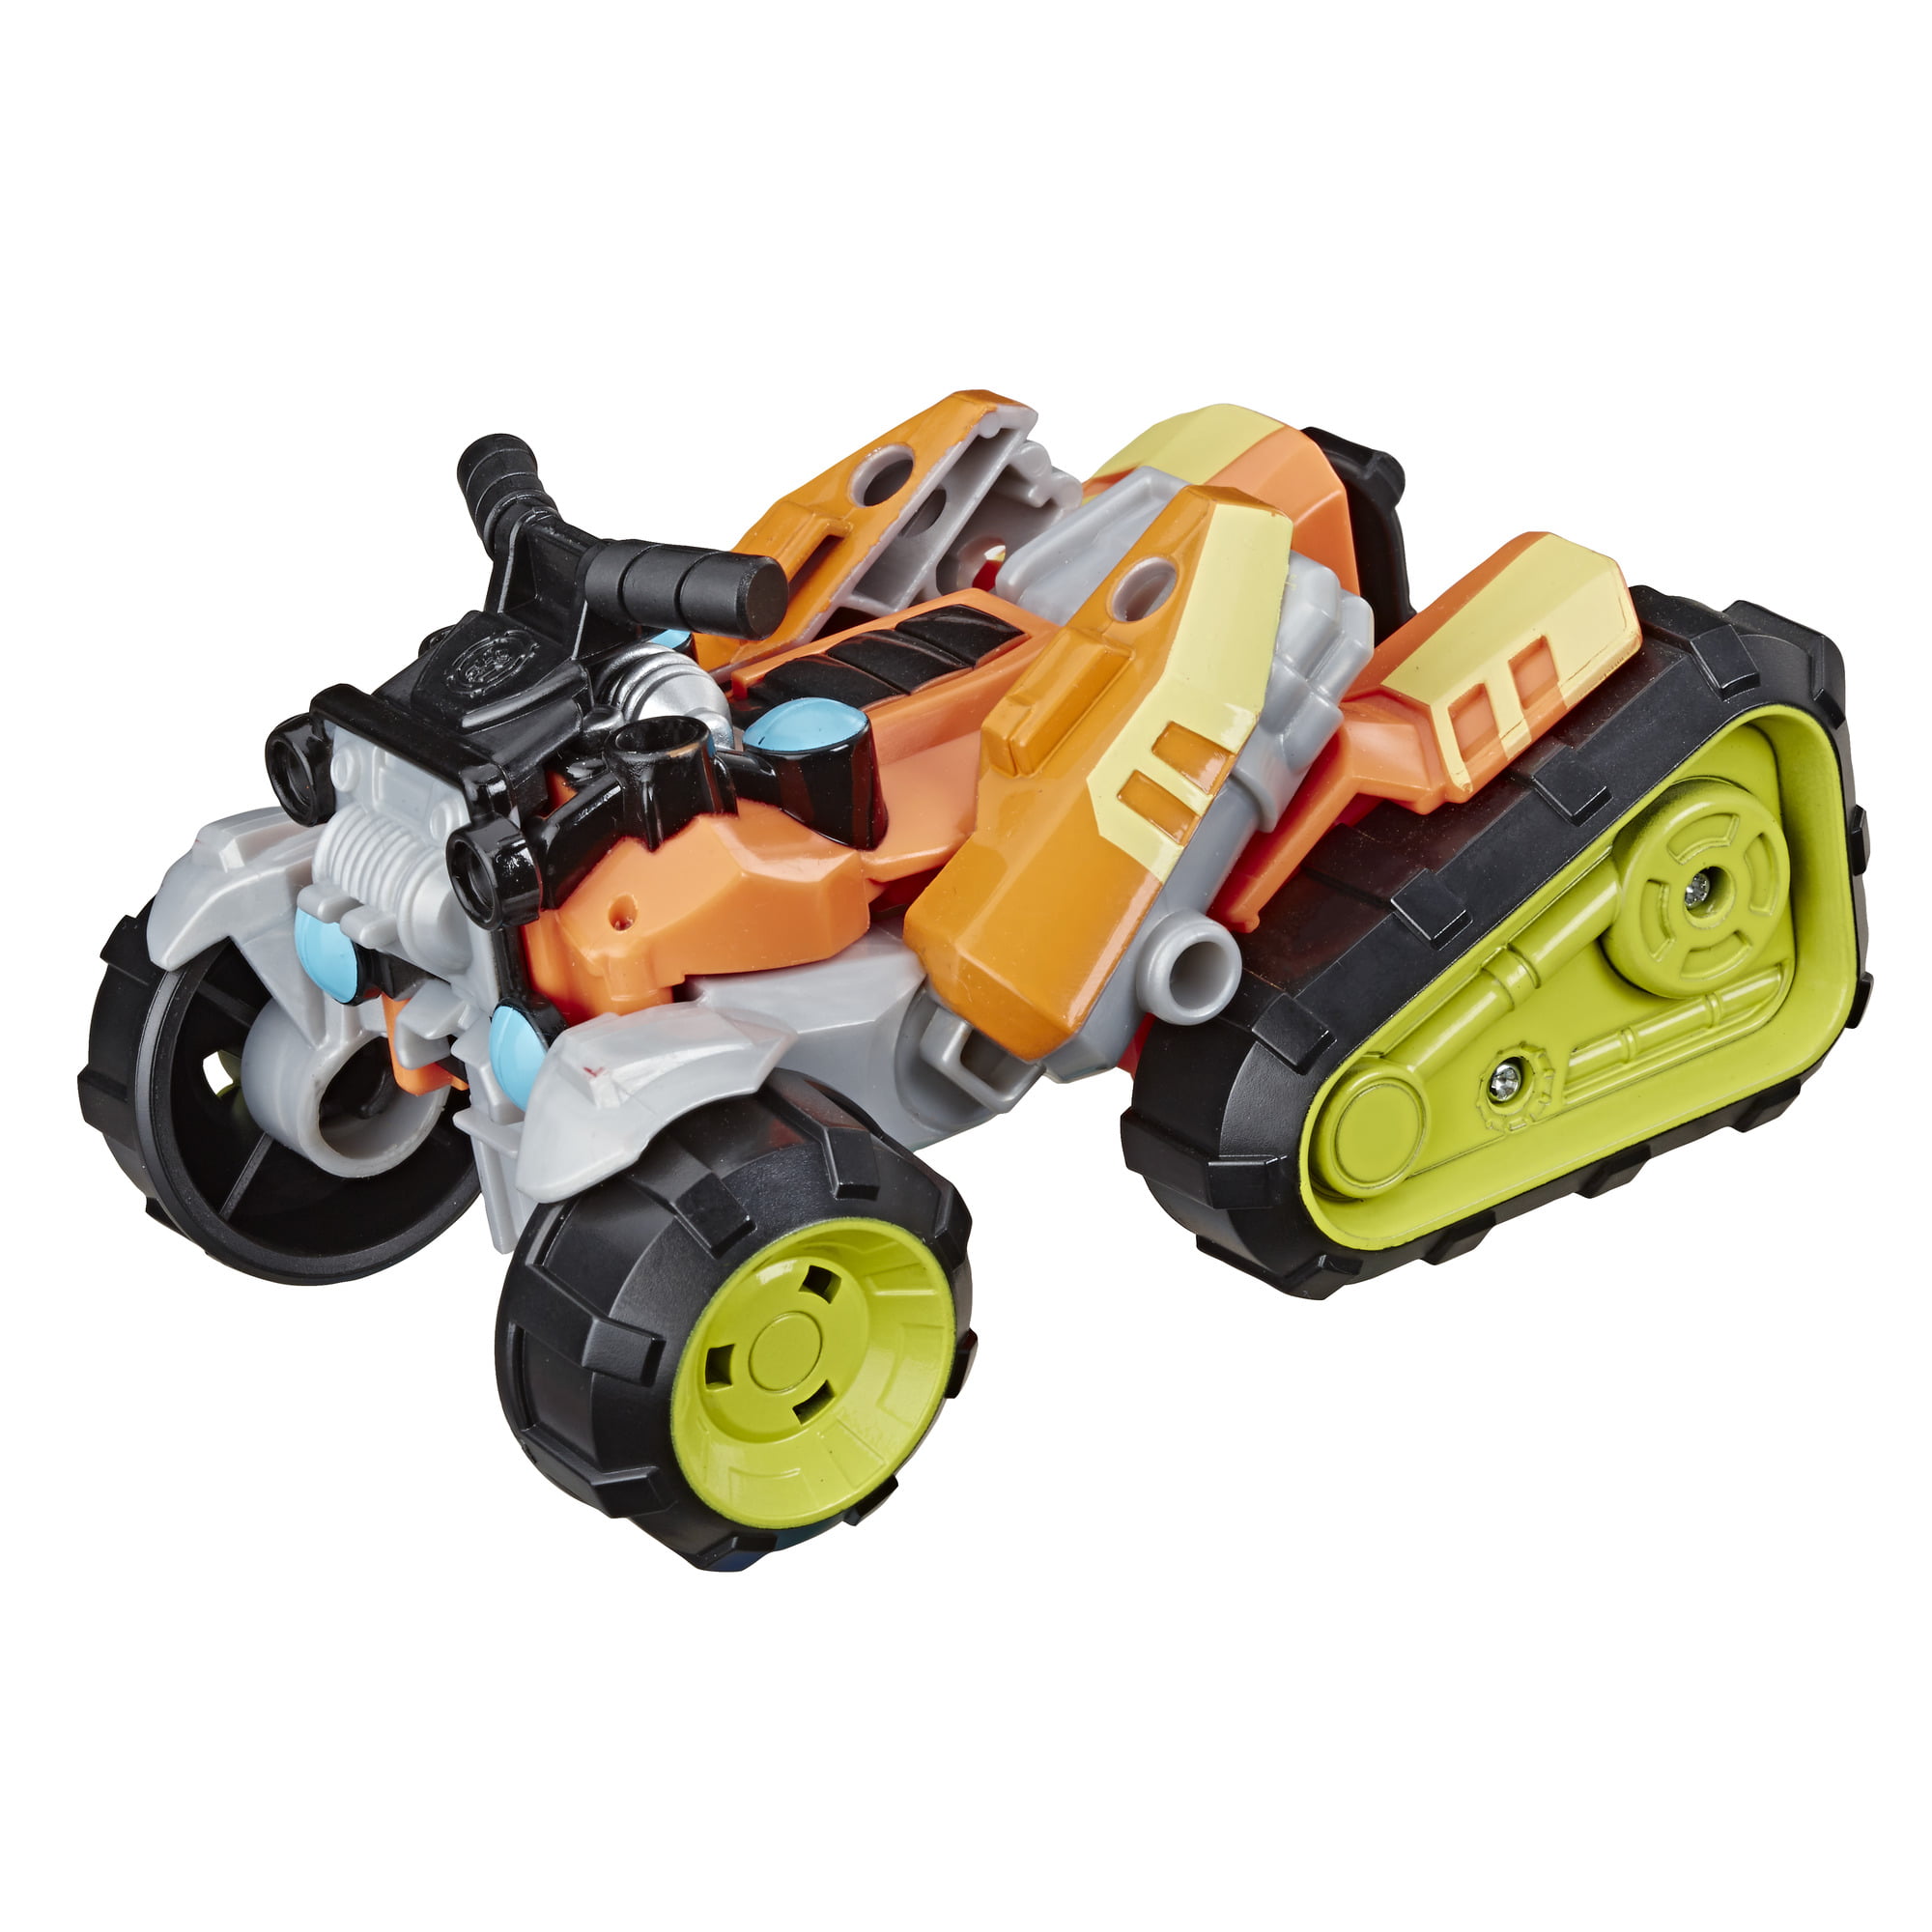 Playskool Transformers Rescue Bots Academy Brushfire Converting 